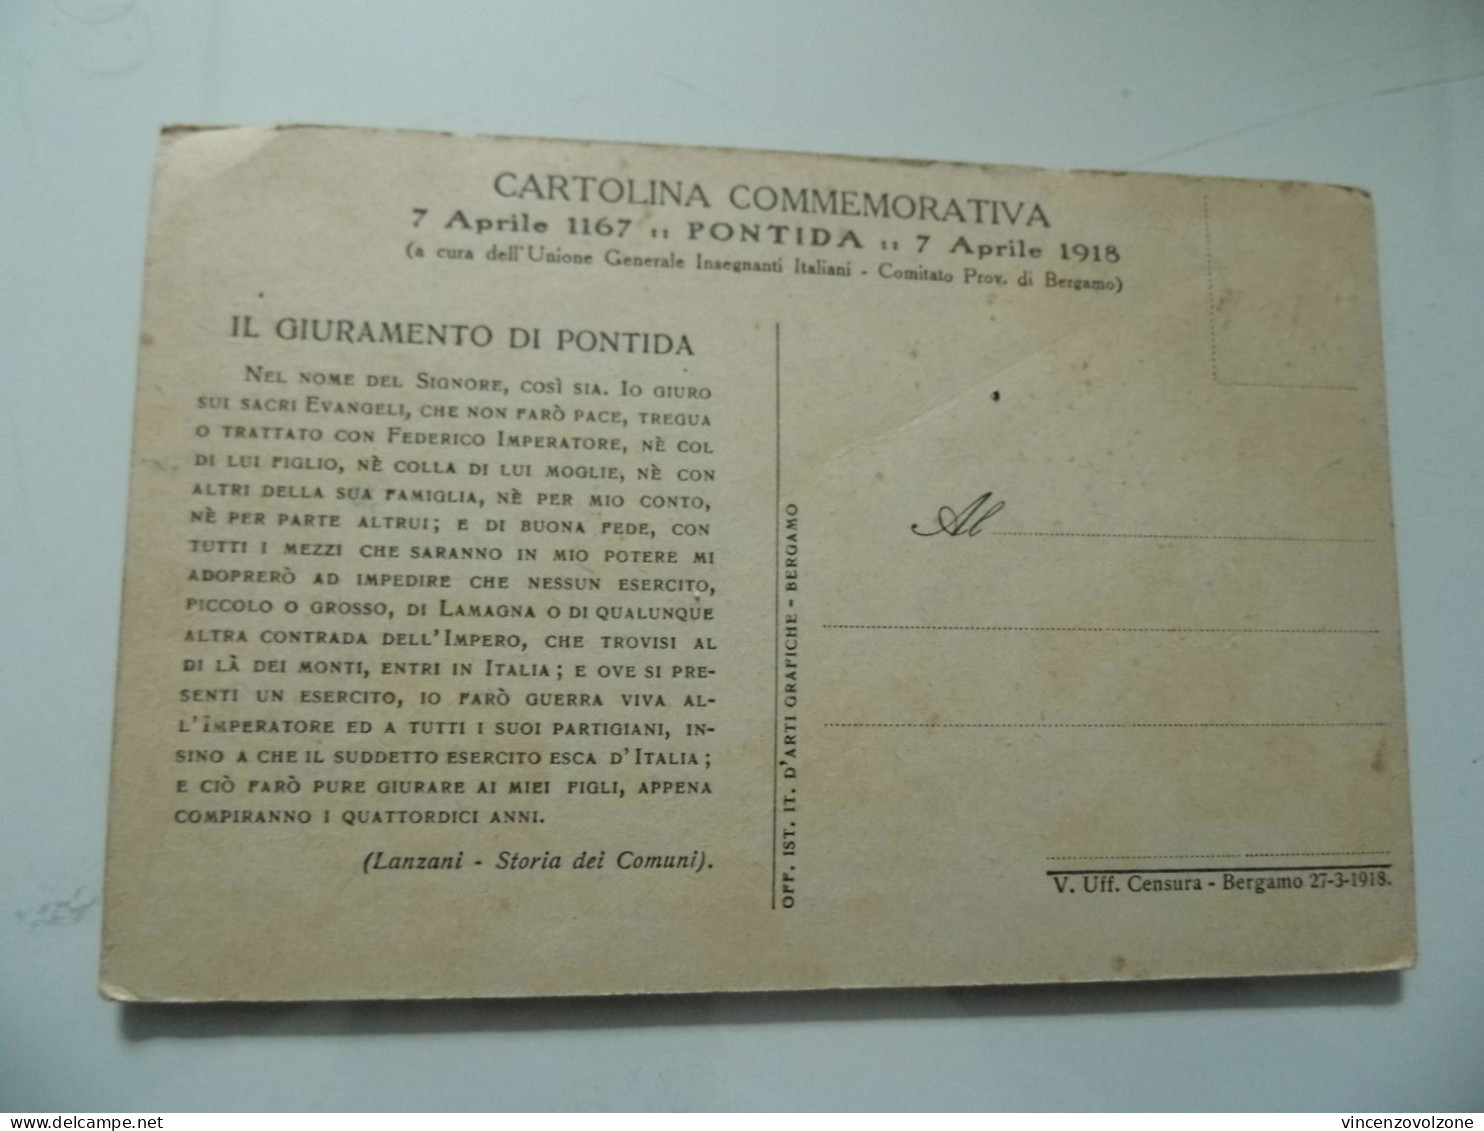 Cartolina "CARTOLINA COMMEMORATIVA GIURAMENTO DI PONTIDA" 1918 - Manifestations